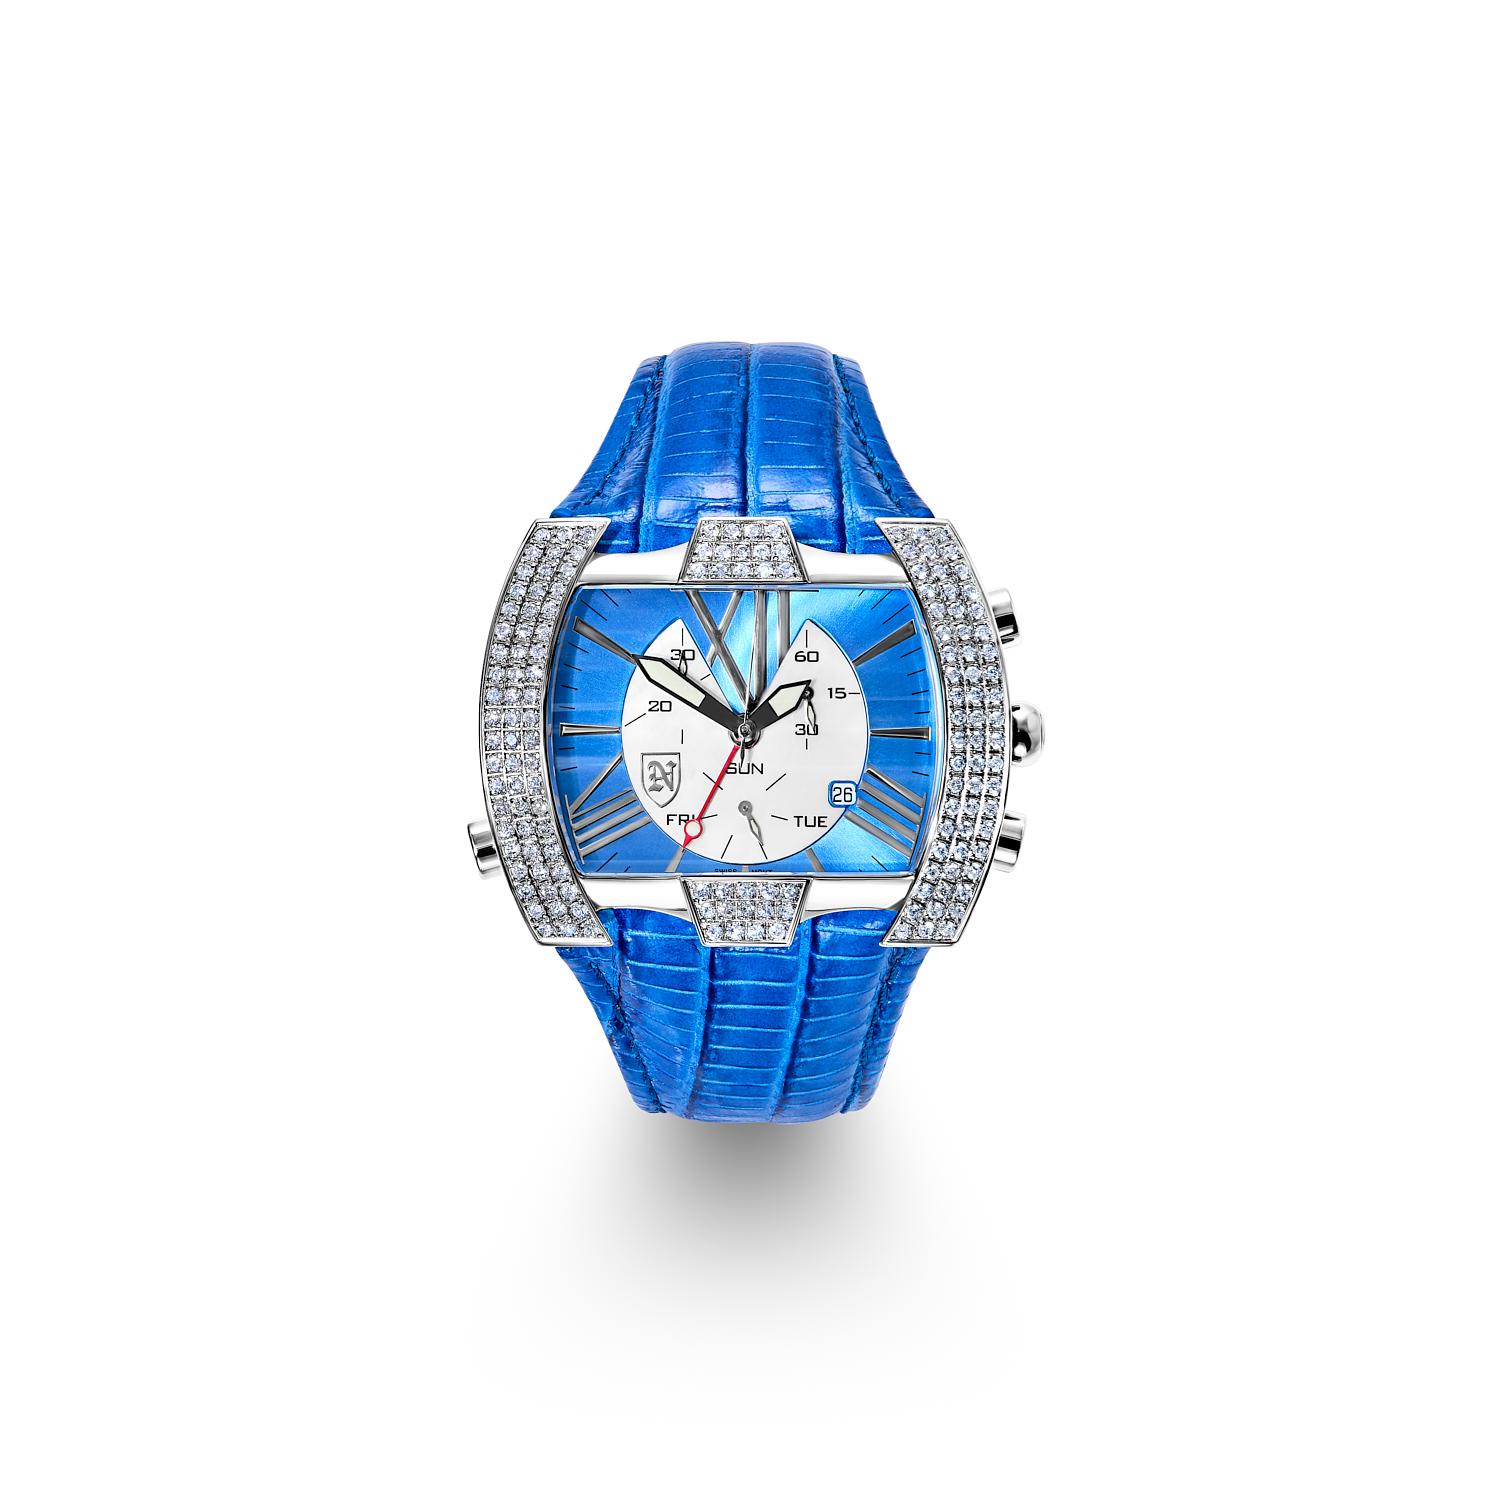 Nekta Watch: Magic
Diamond Carats: 2.35 Carats
Settings: Pave Diamonds
Blue Leather Strap